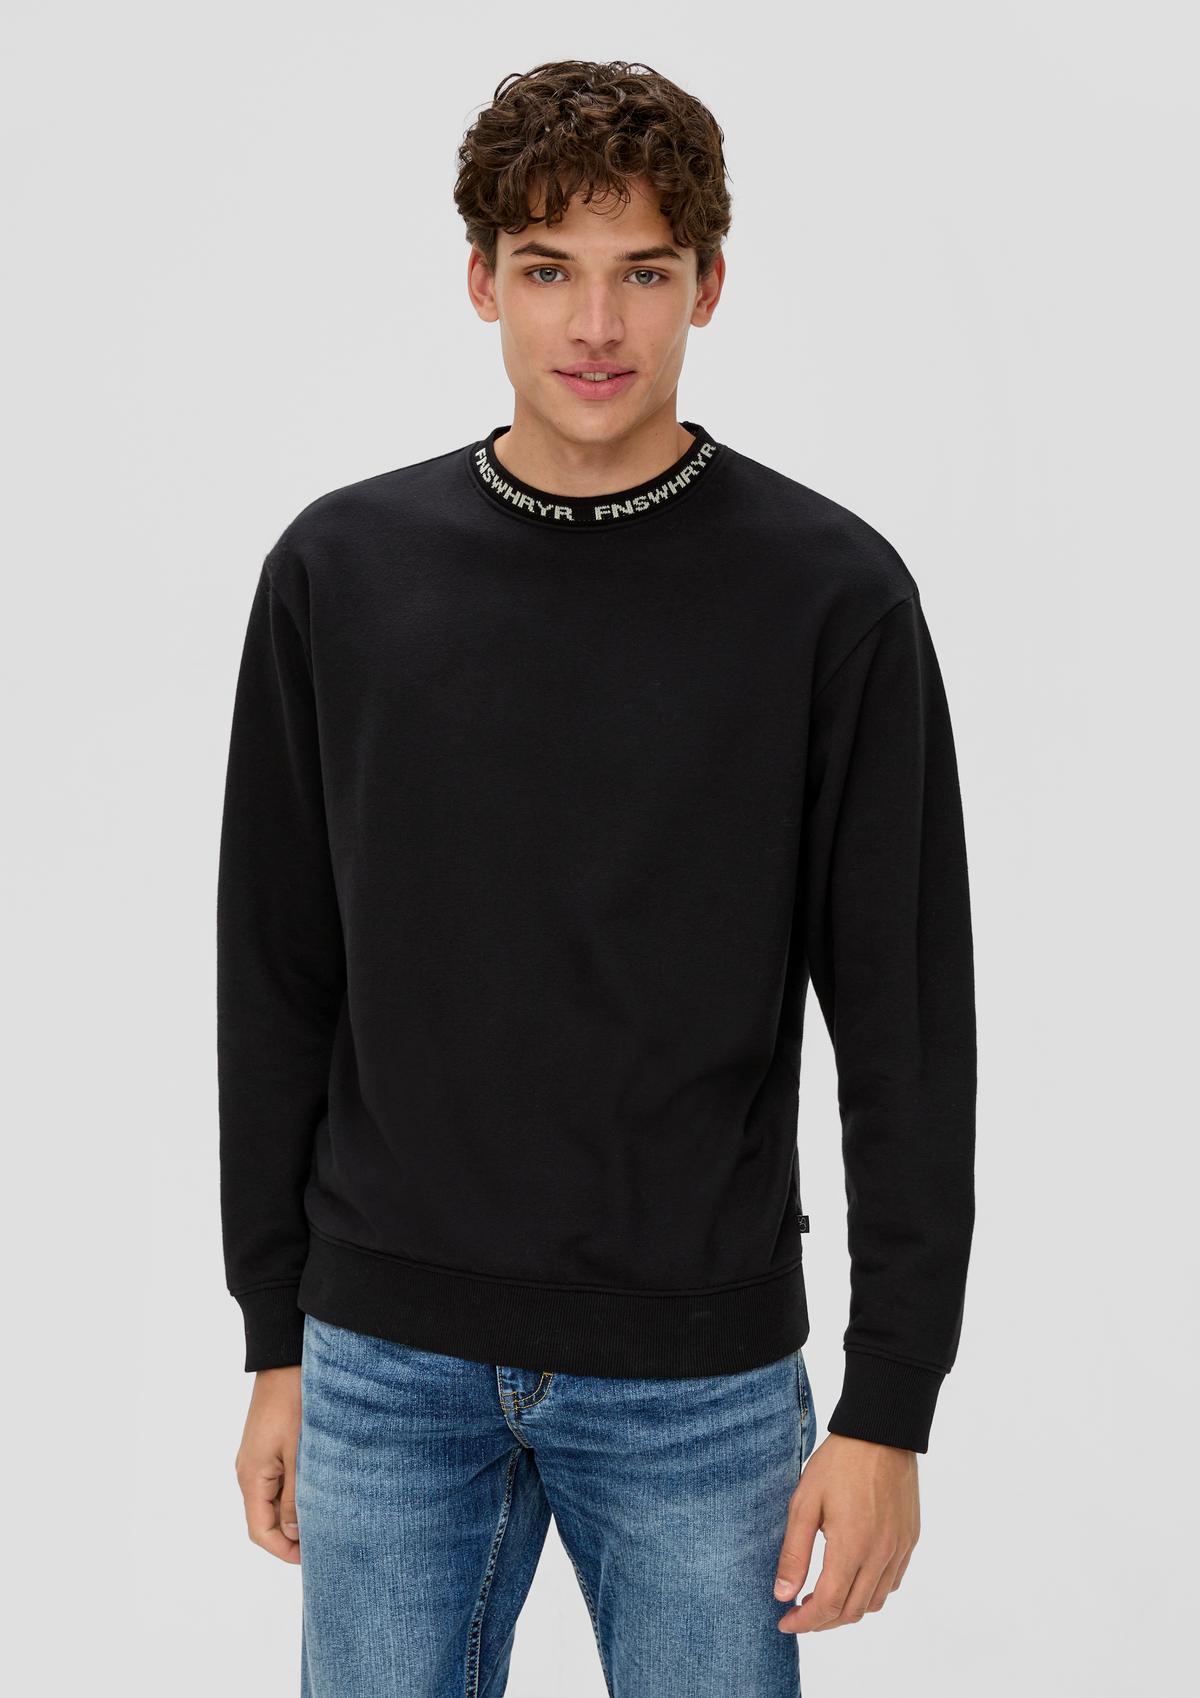 Sweatshirt with a jacquard trim